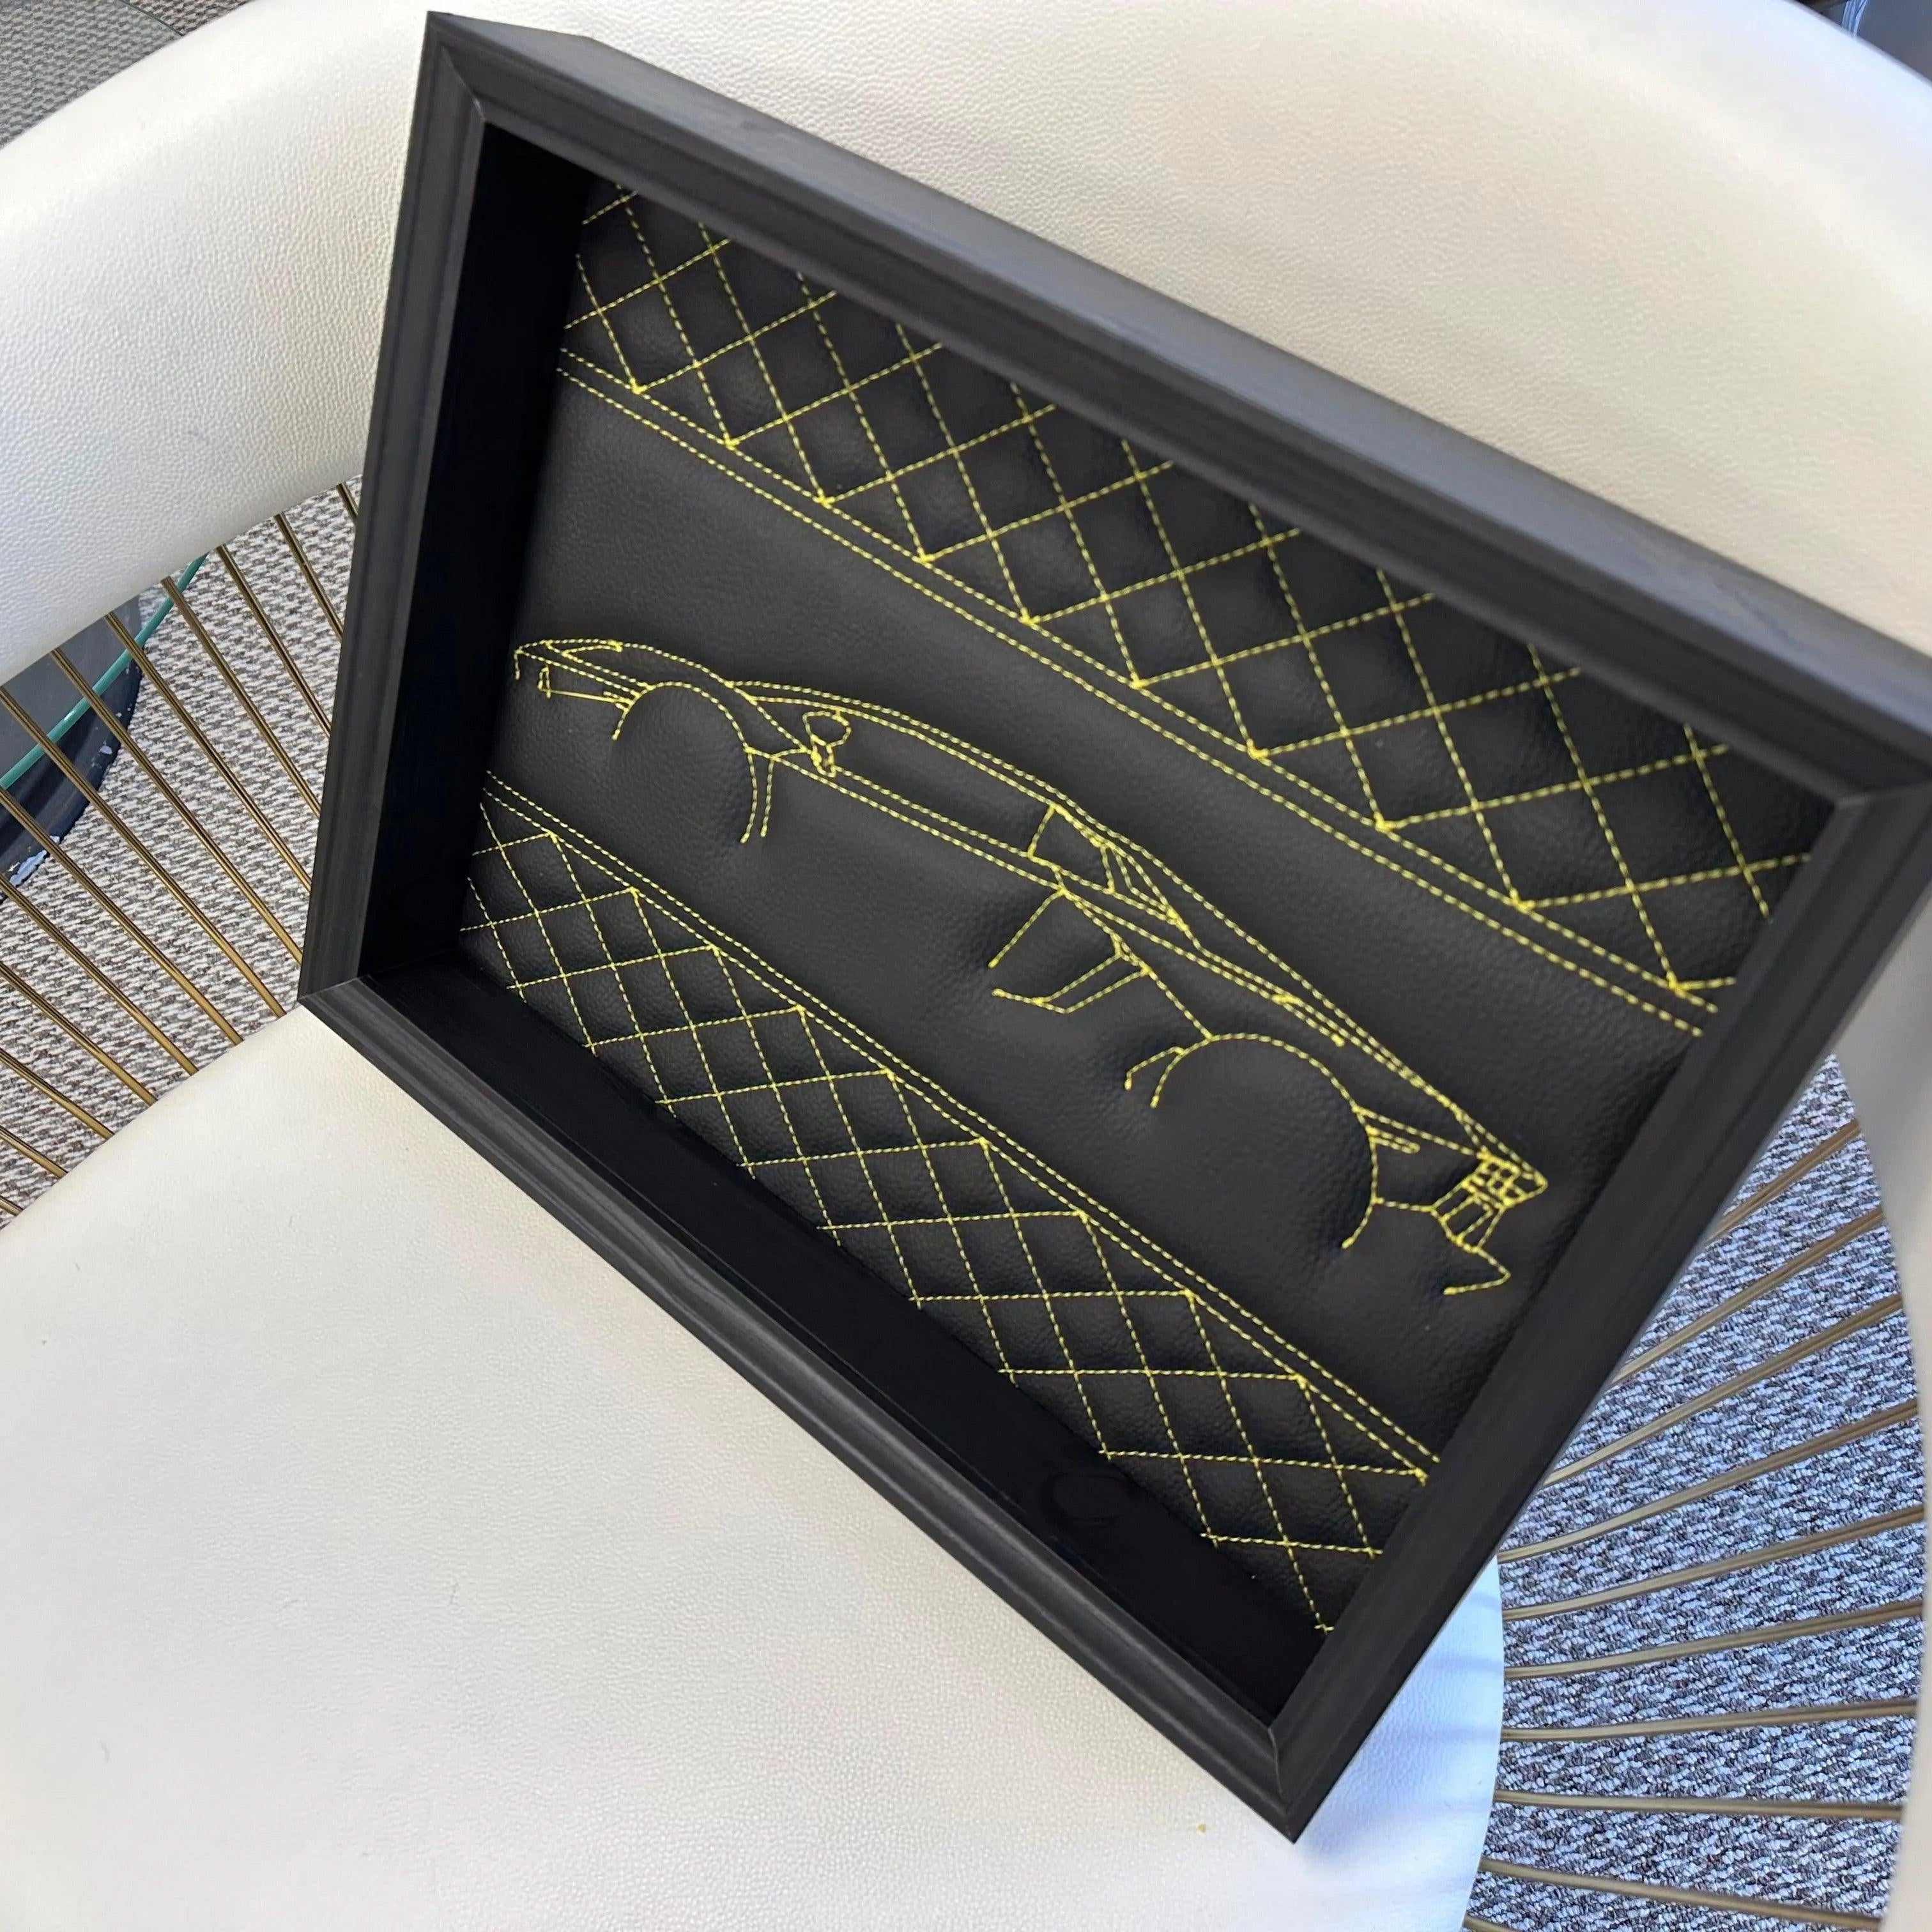 Black Leather Lamborghini Aventador Inspired Wall Art: Embroidered Yellow Stitch